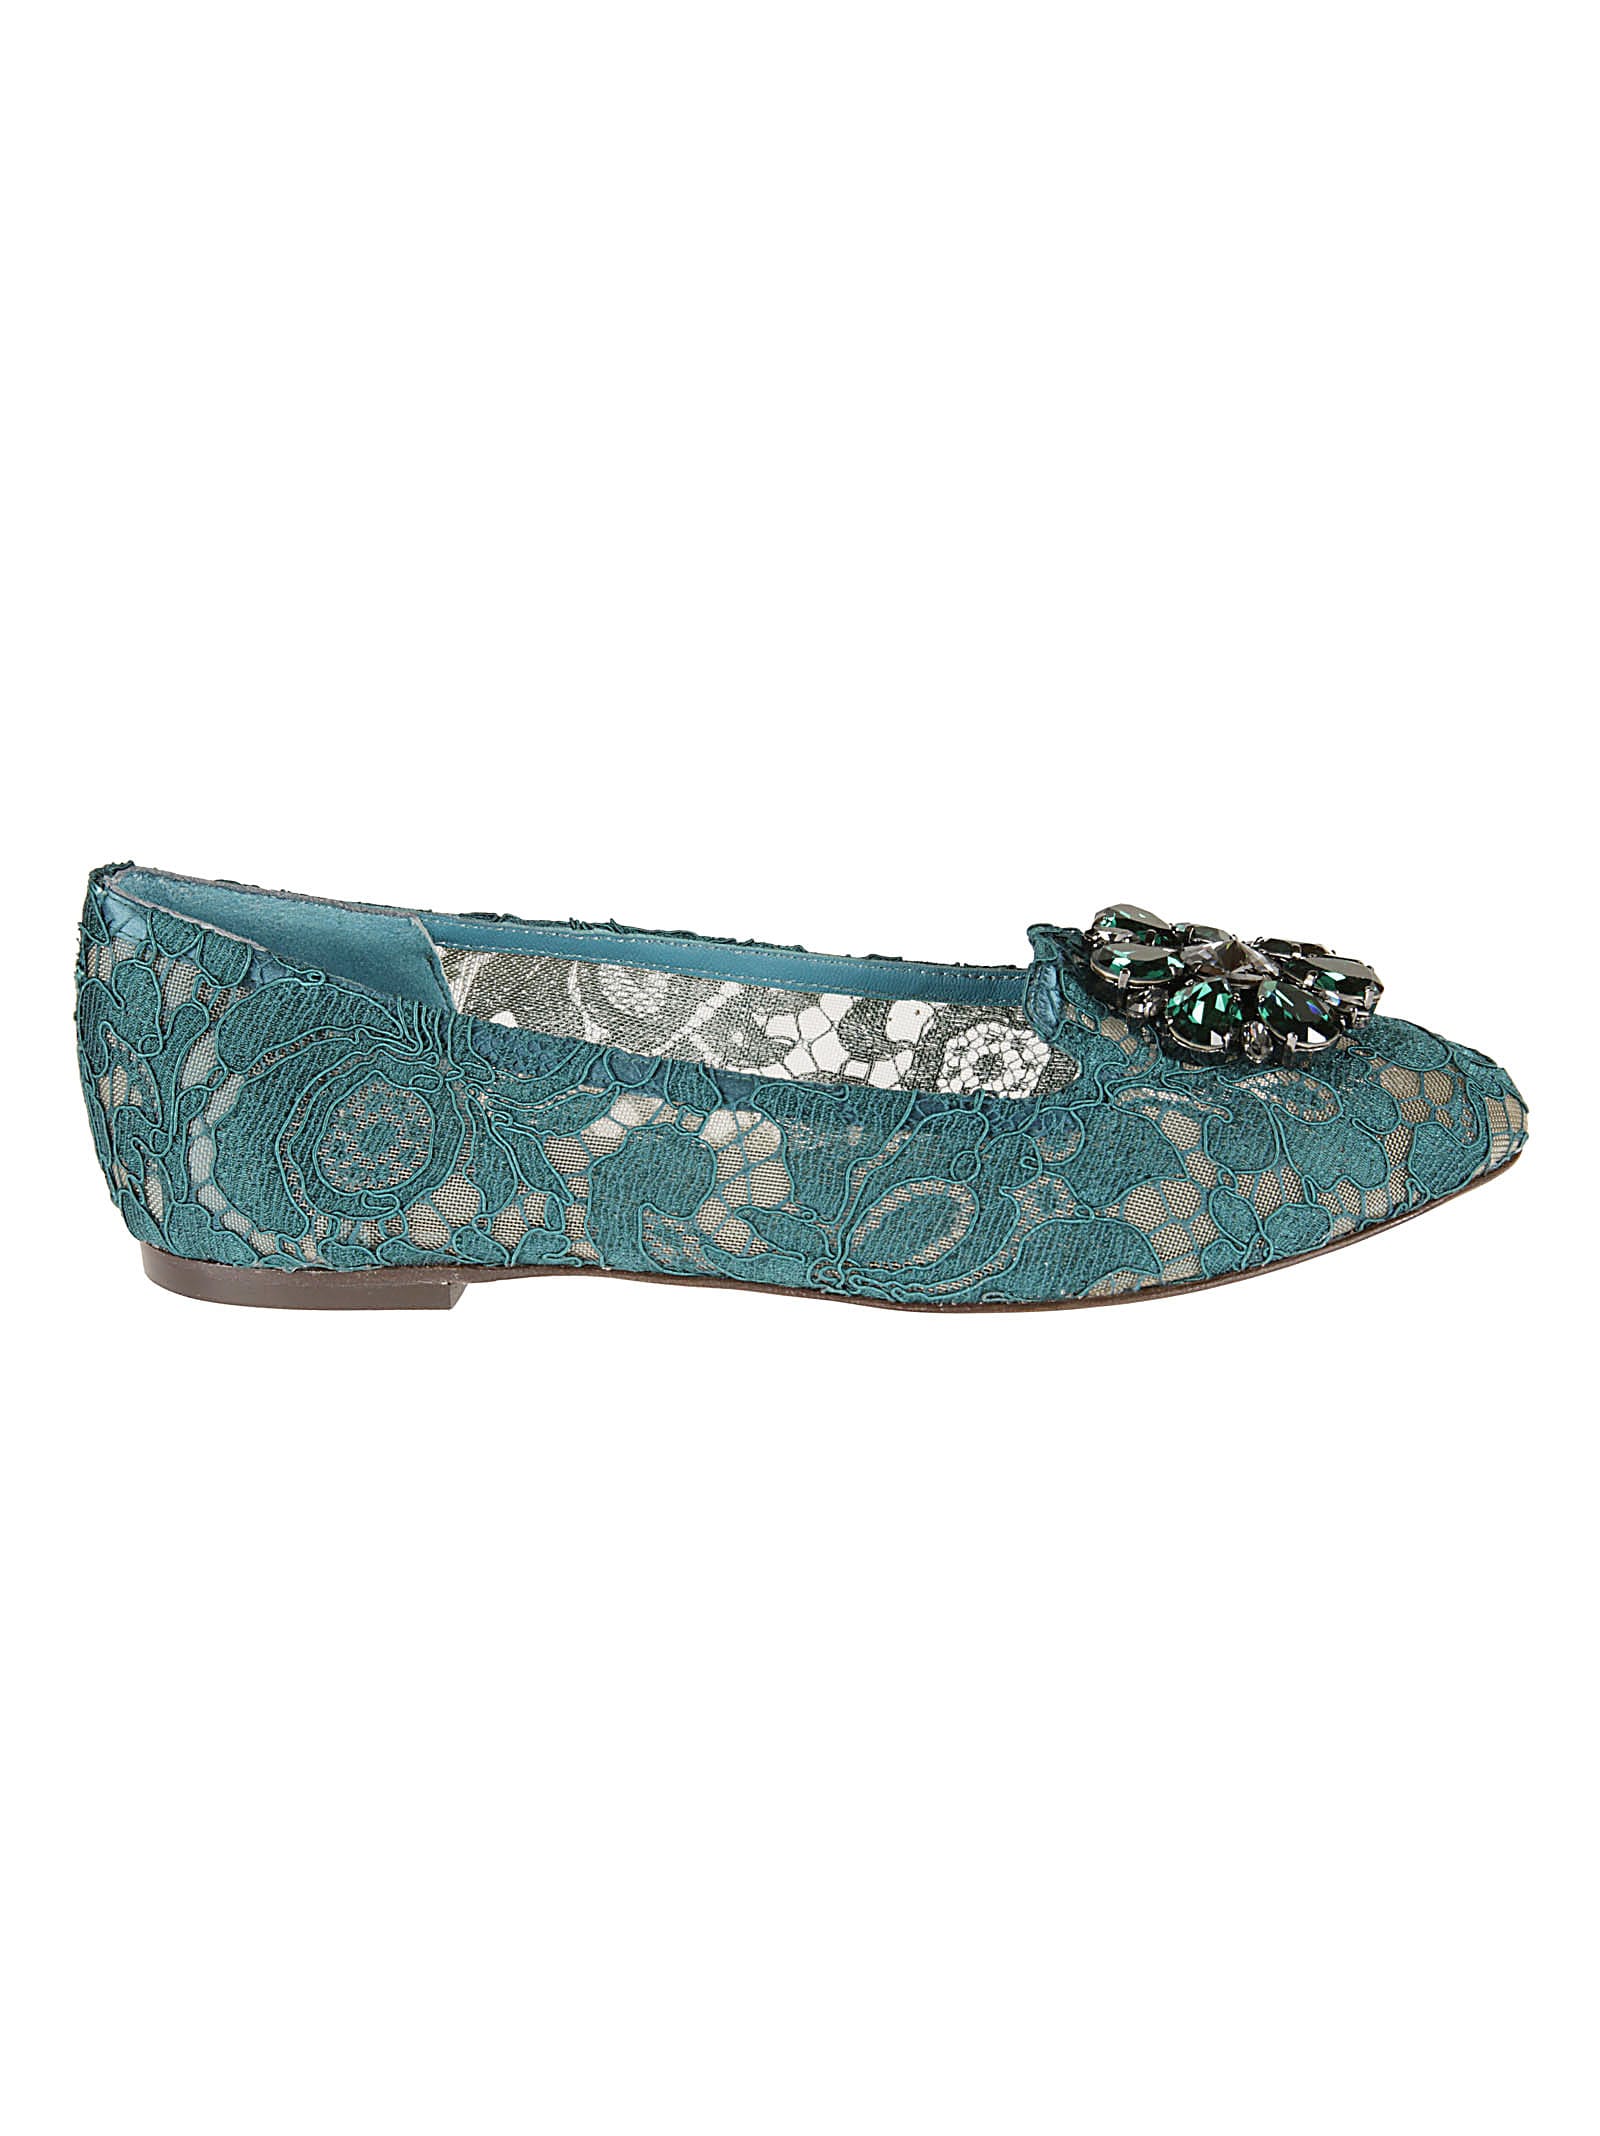 Dolce & Gabbana Crystal Embellished Floral Lace Slippers